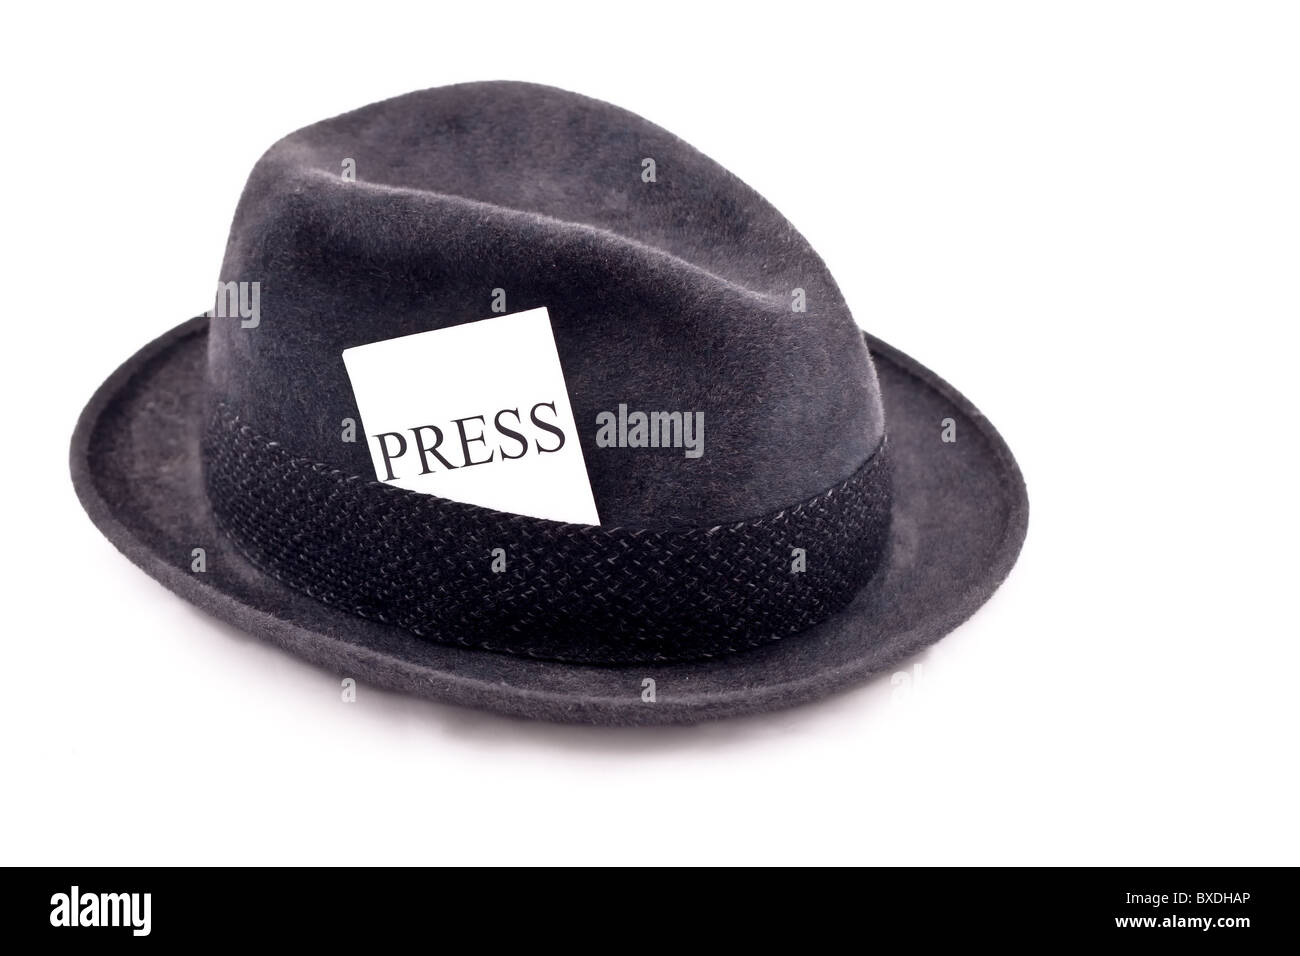 Un fotoperiodista fedora hat con tarjeta de prensa Foto de stock